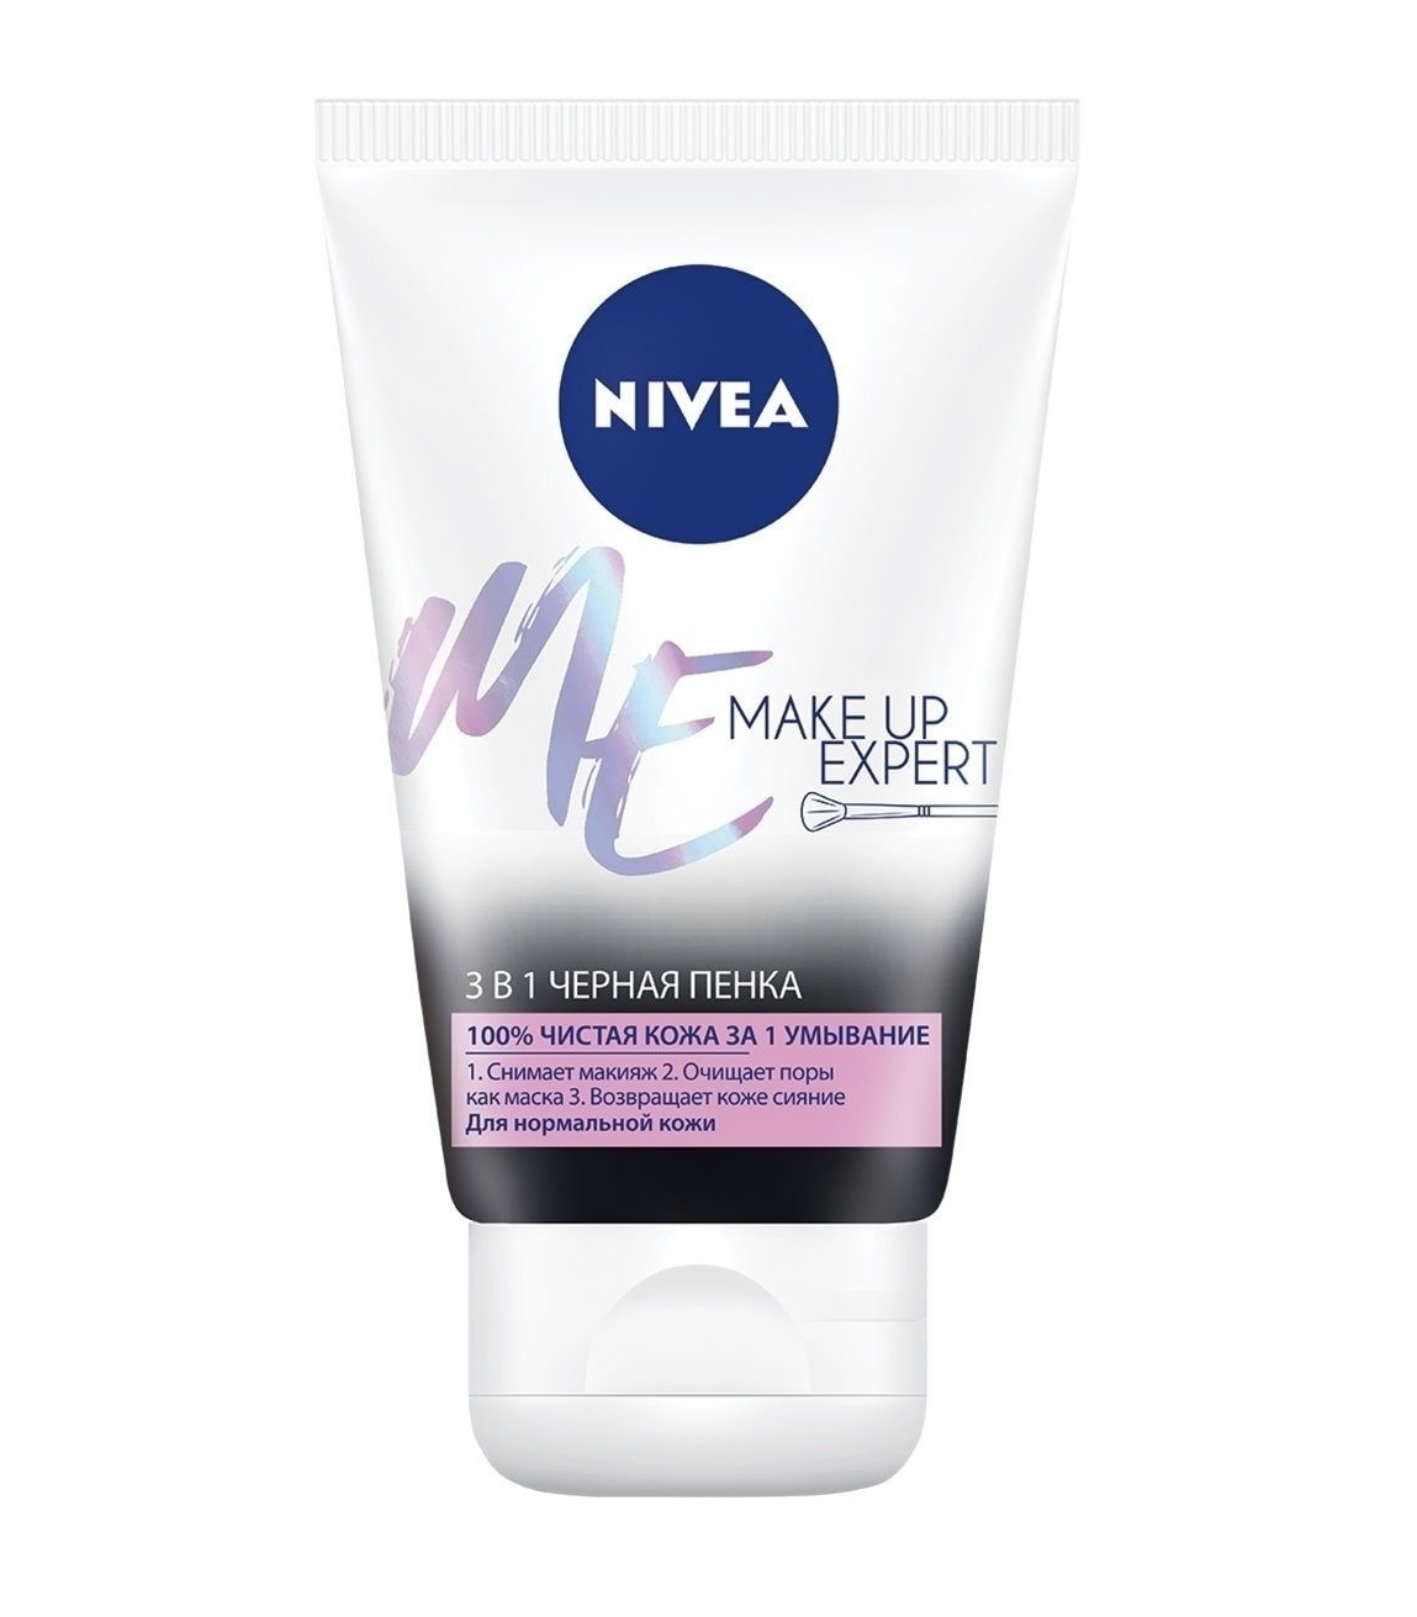   / Nivea Make Up Expert -     31   100 